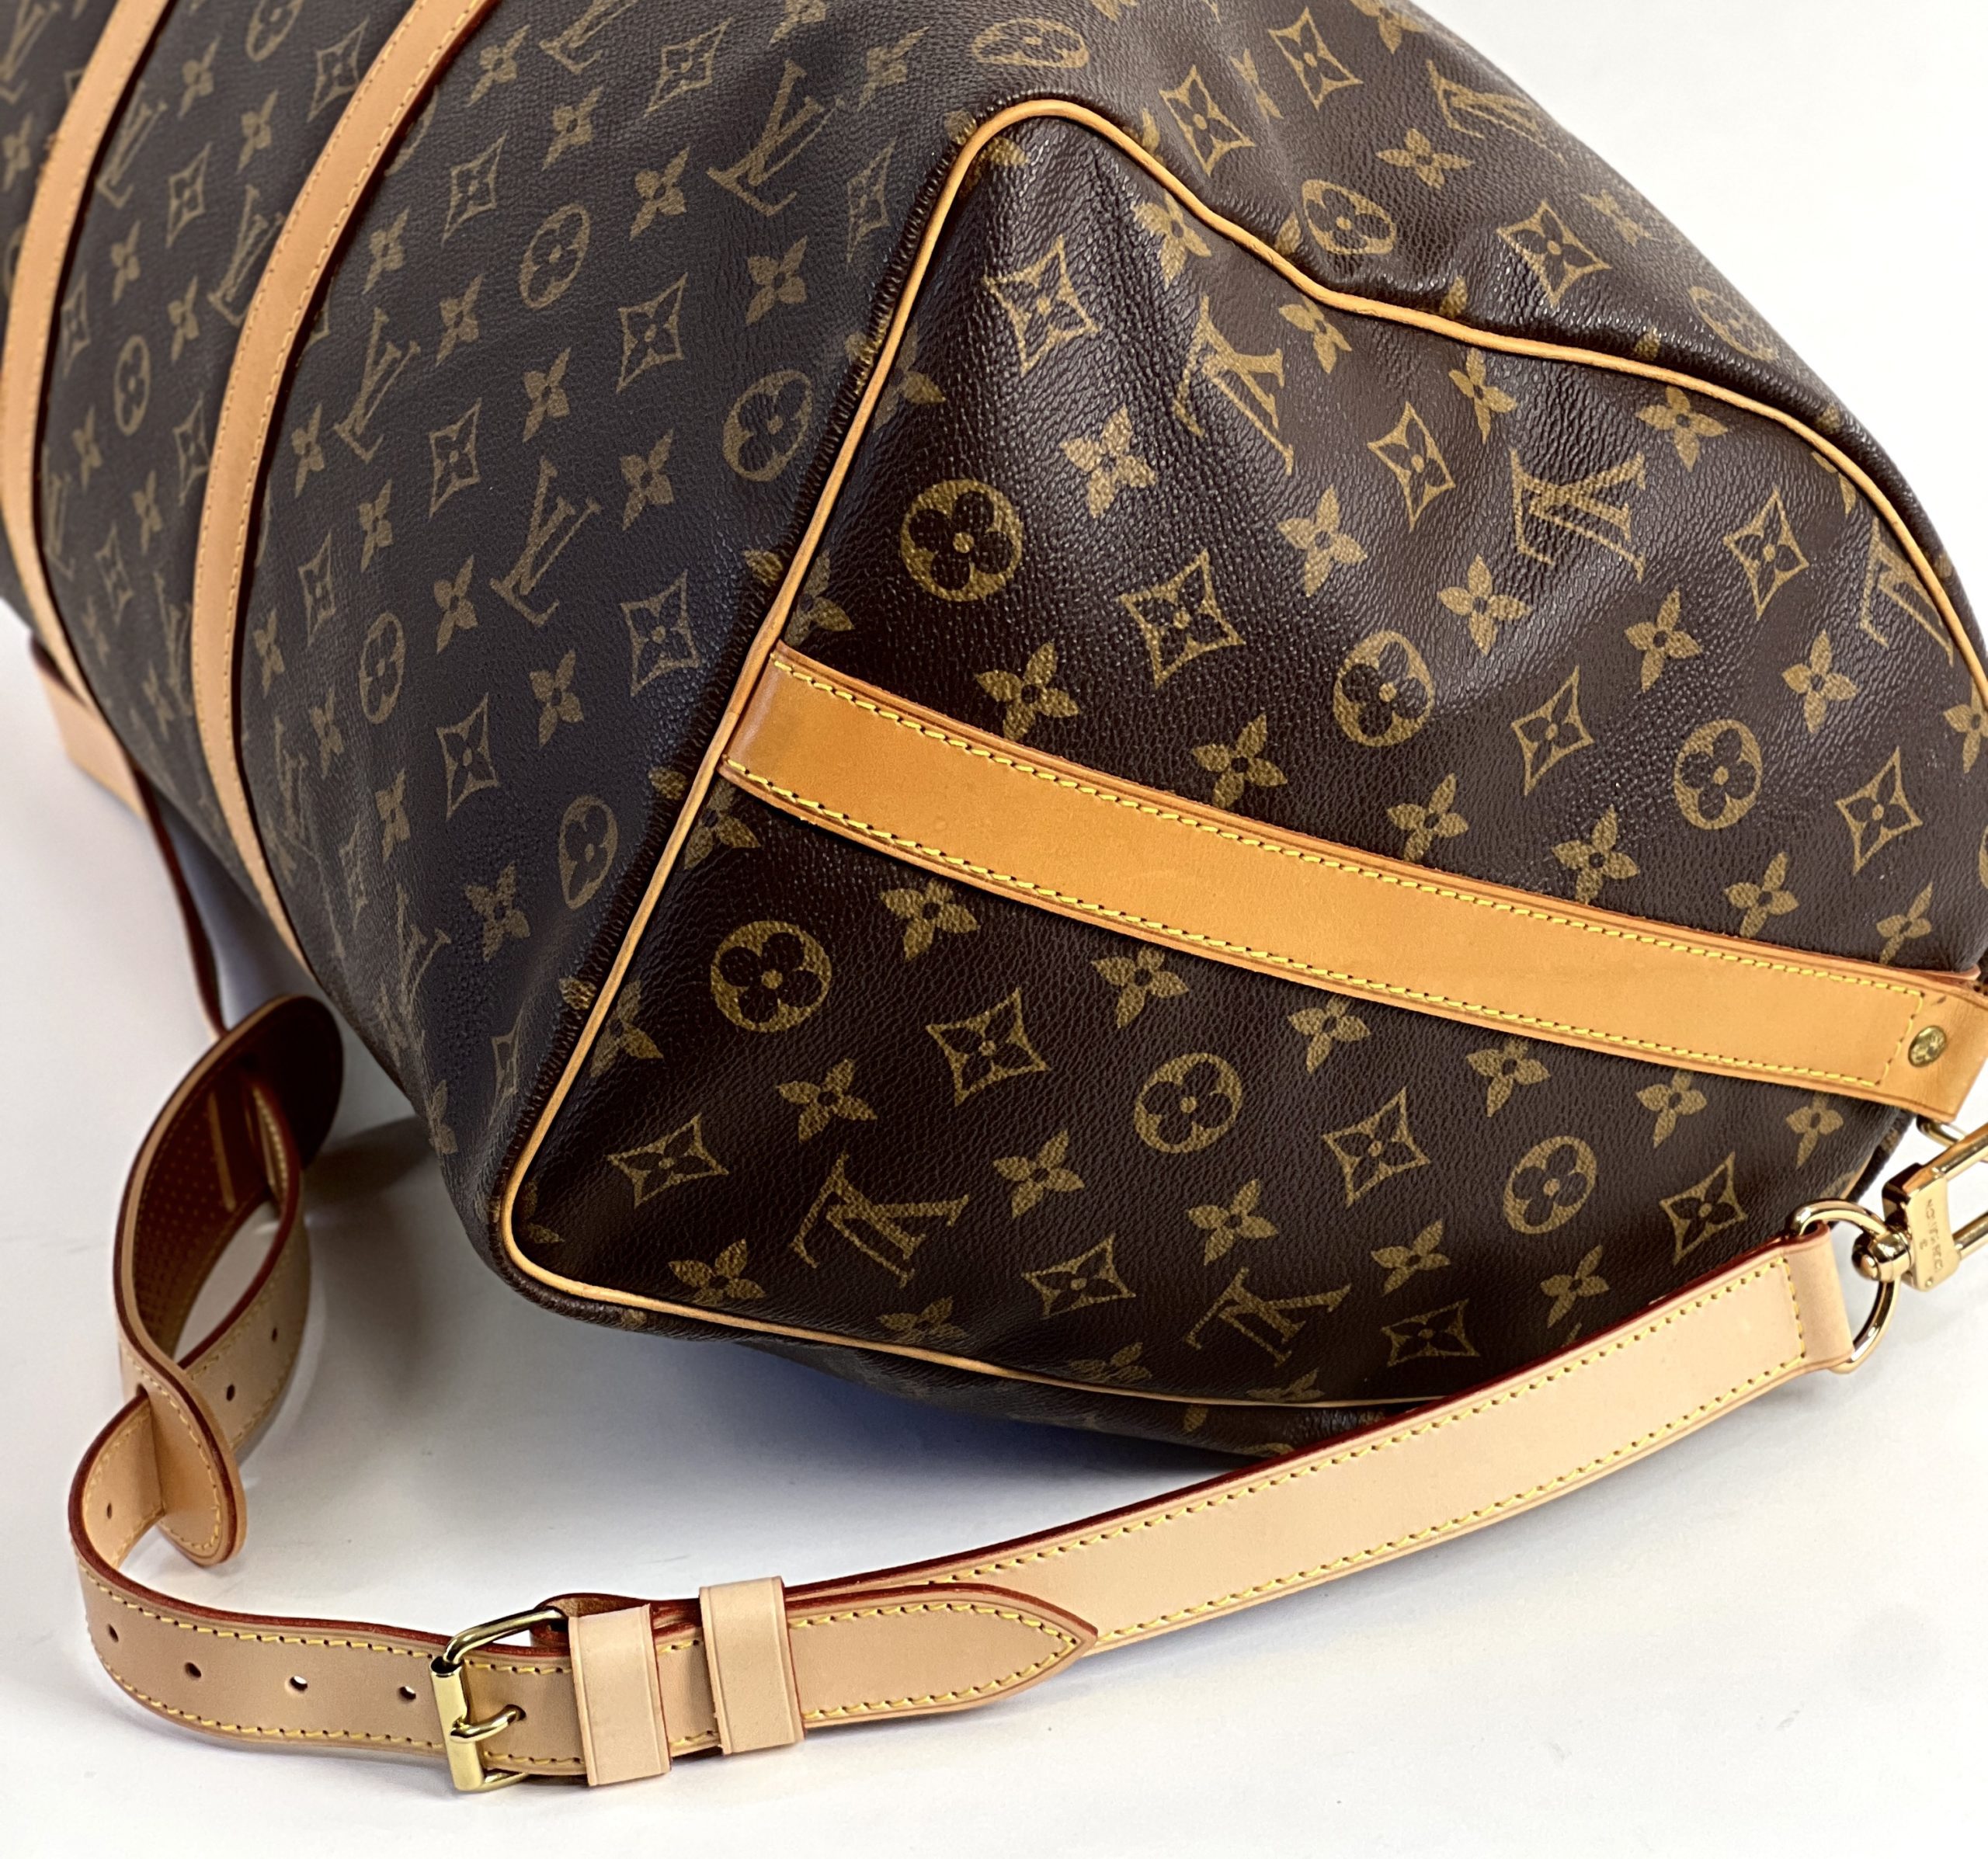 Louis Vuitton Keepall Bag Limited Edition Monogram Cerises 45